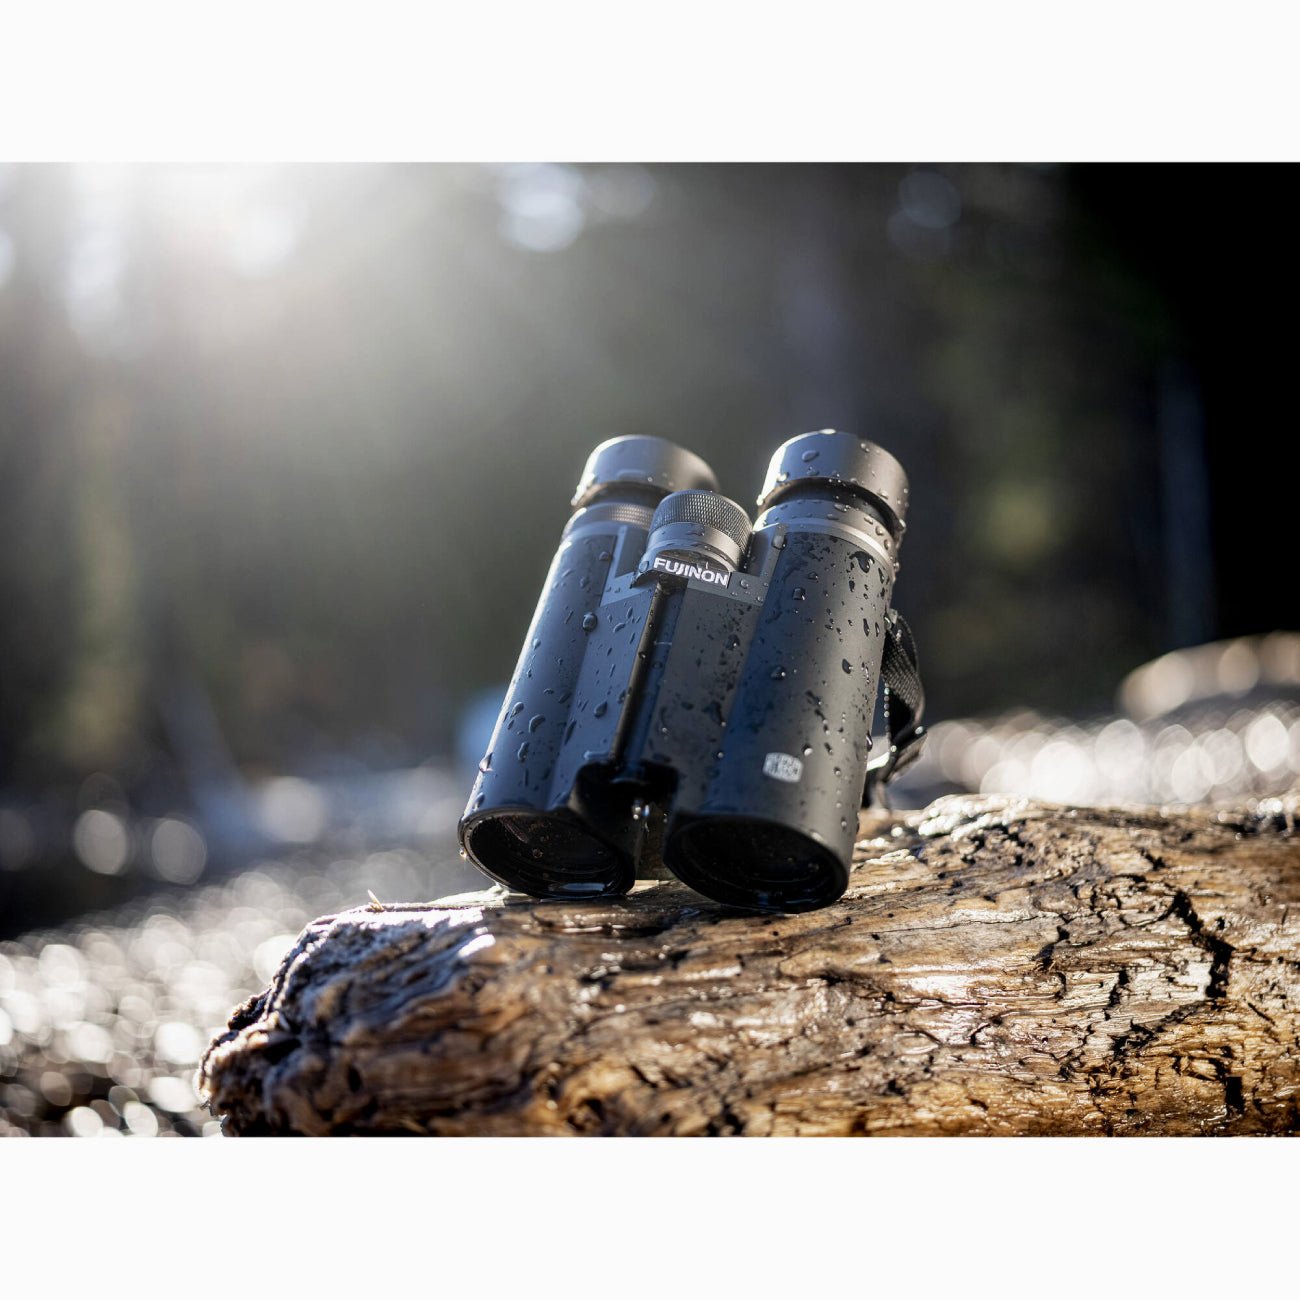 Fujinon 8x42 Hyper Clarity Binoculars - In Outdoor Setting